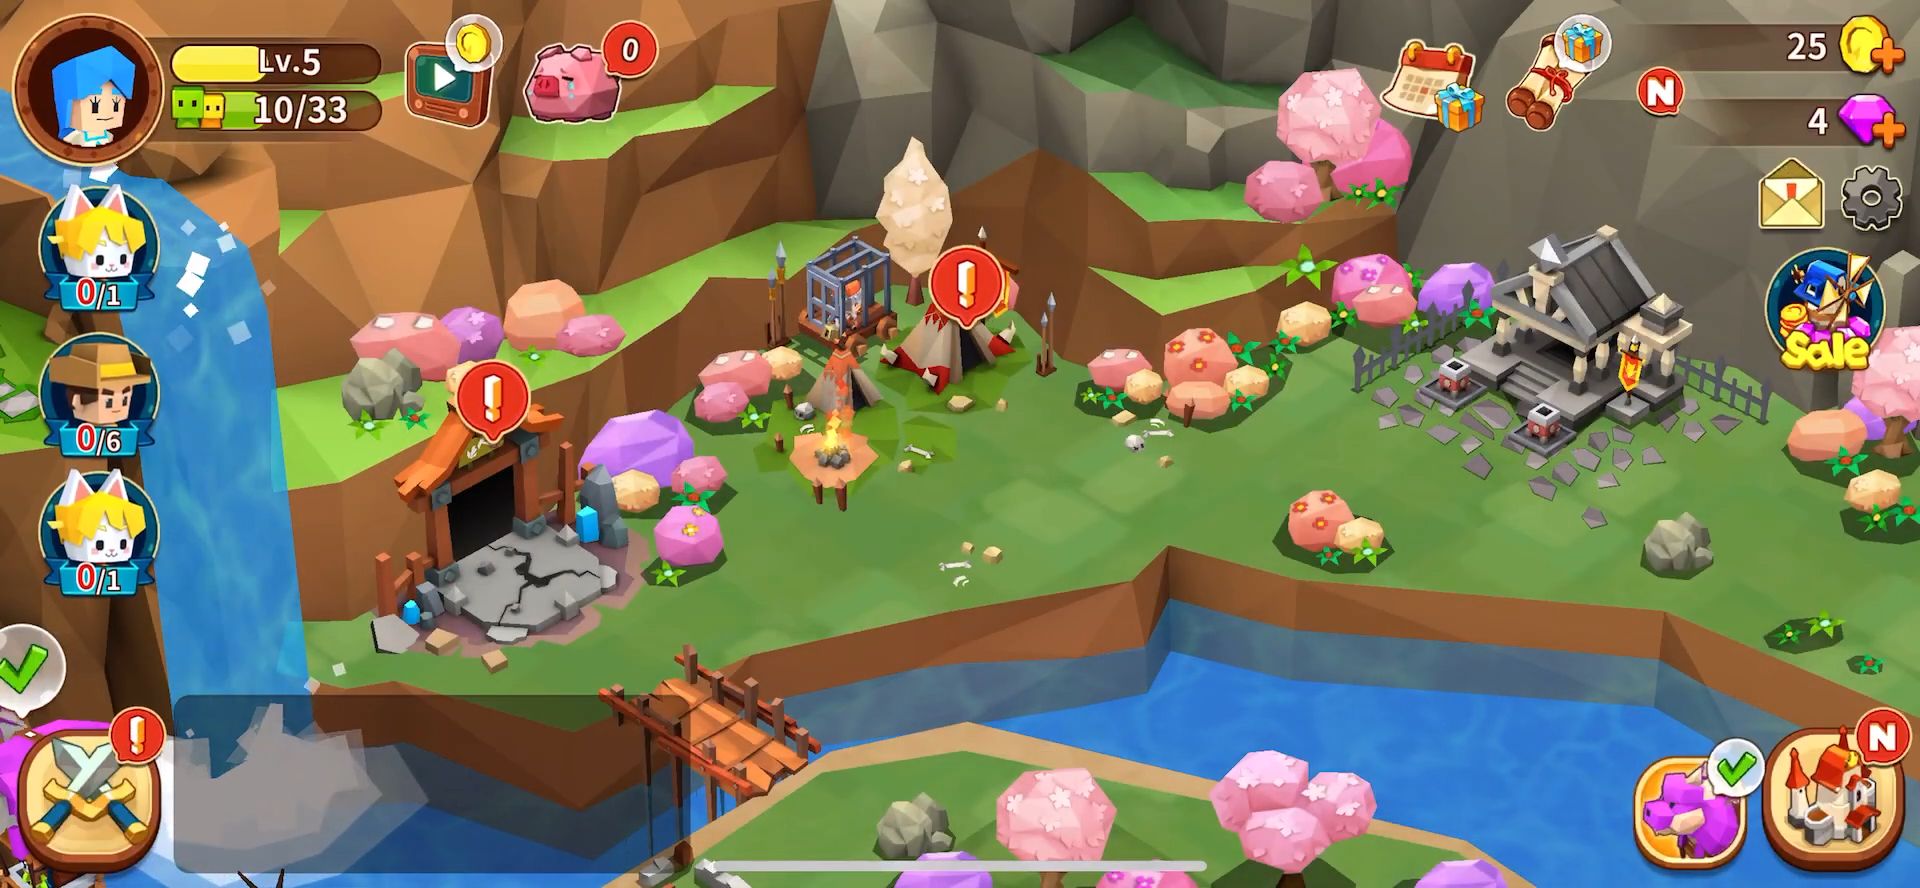 Garena Fantasy Town - Farm Sim for Android